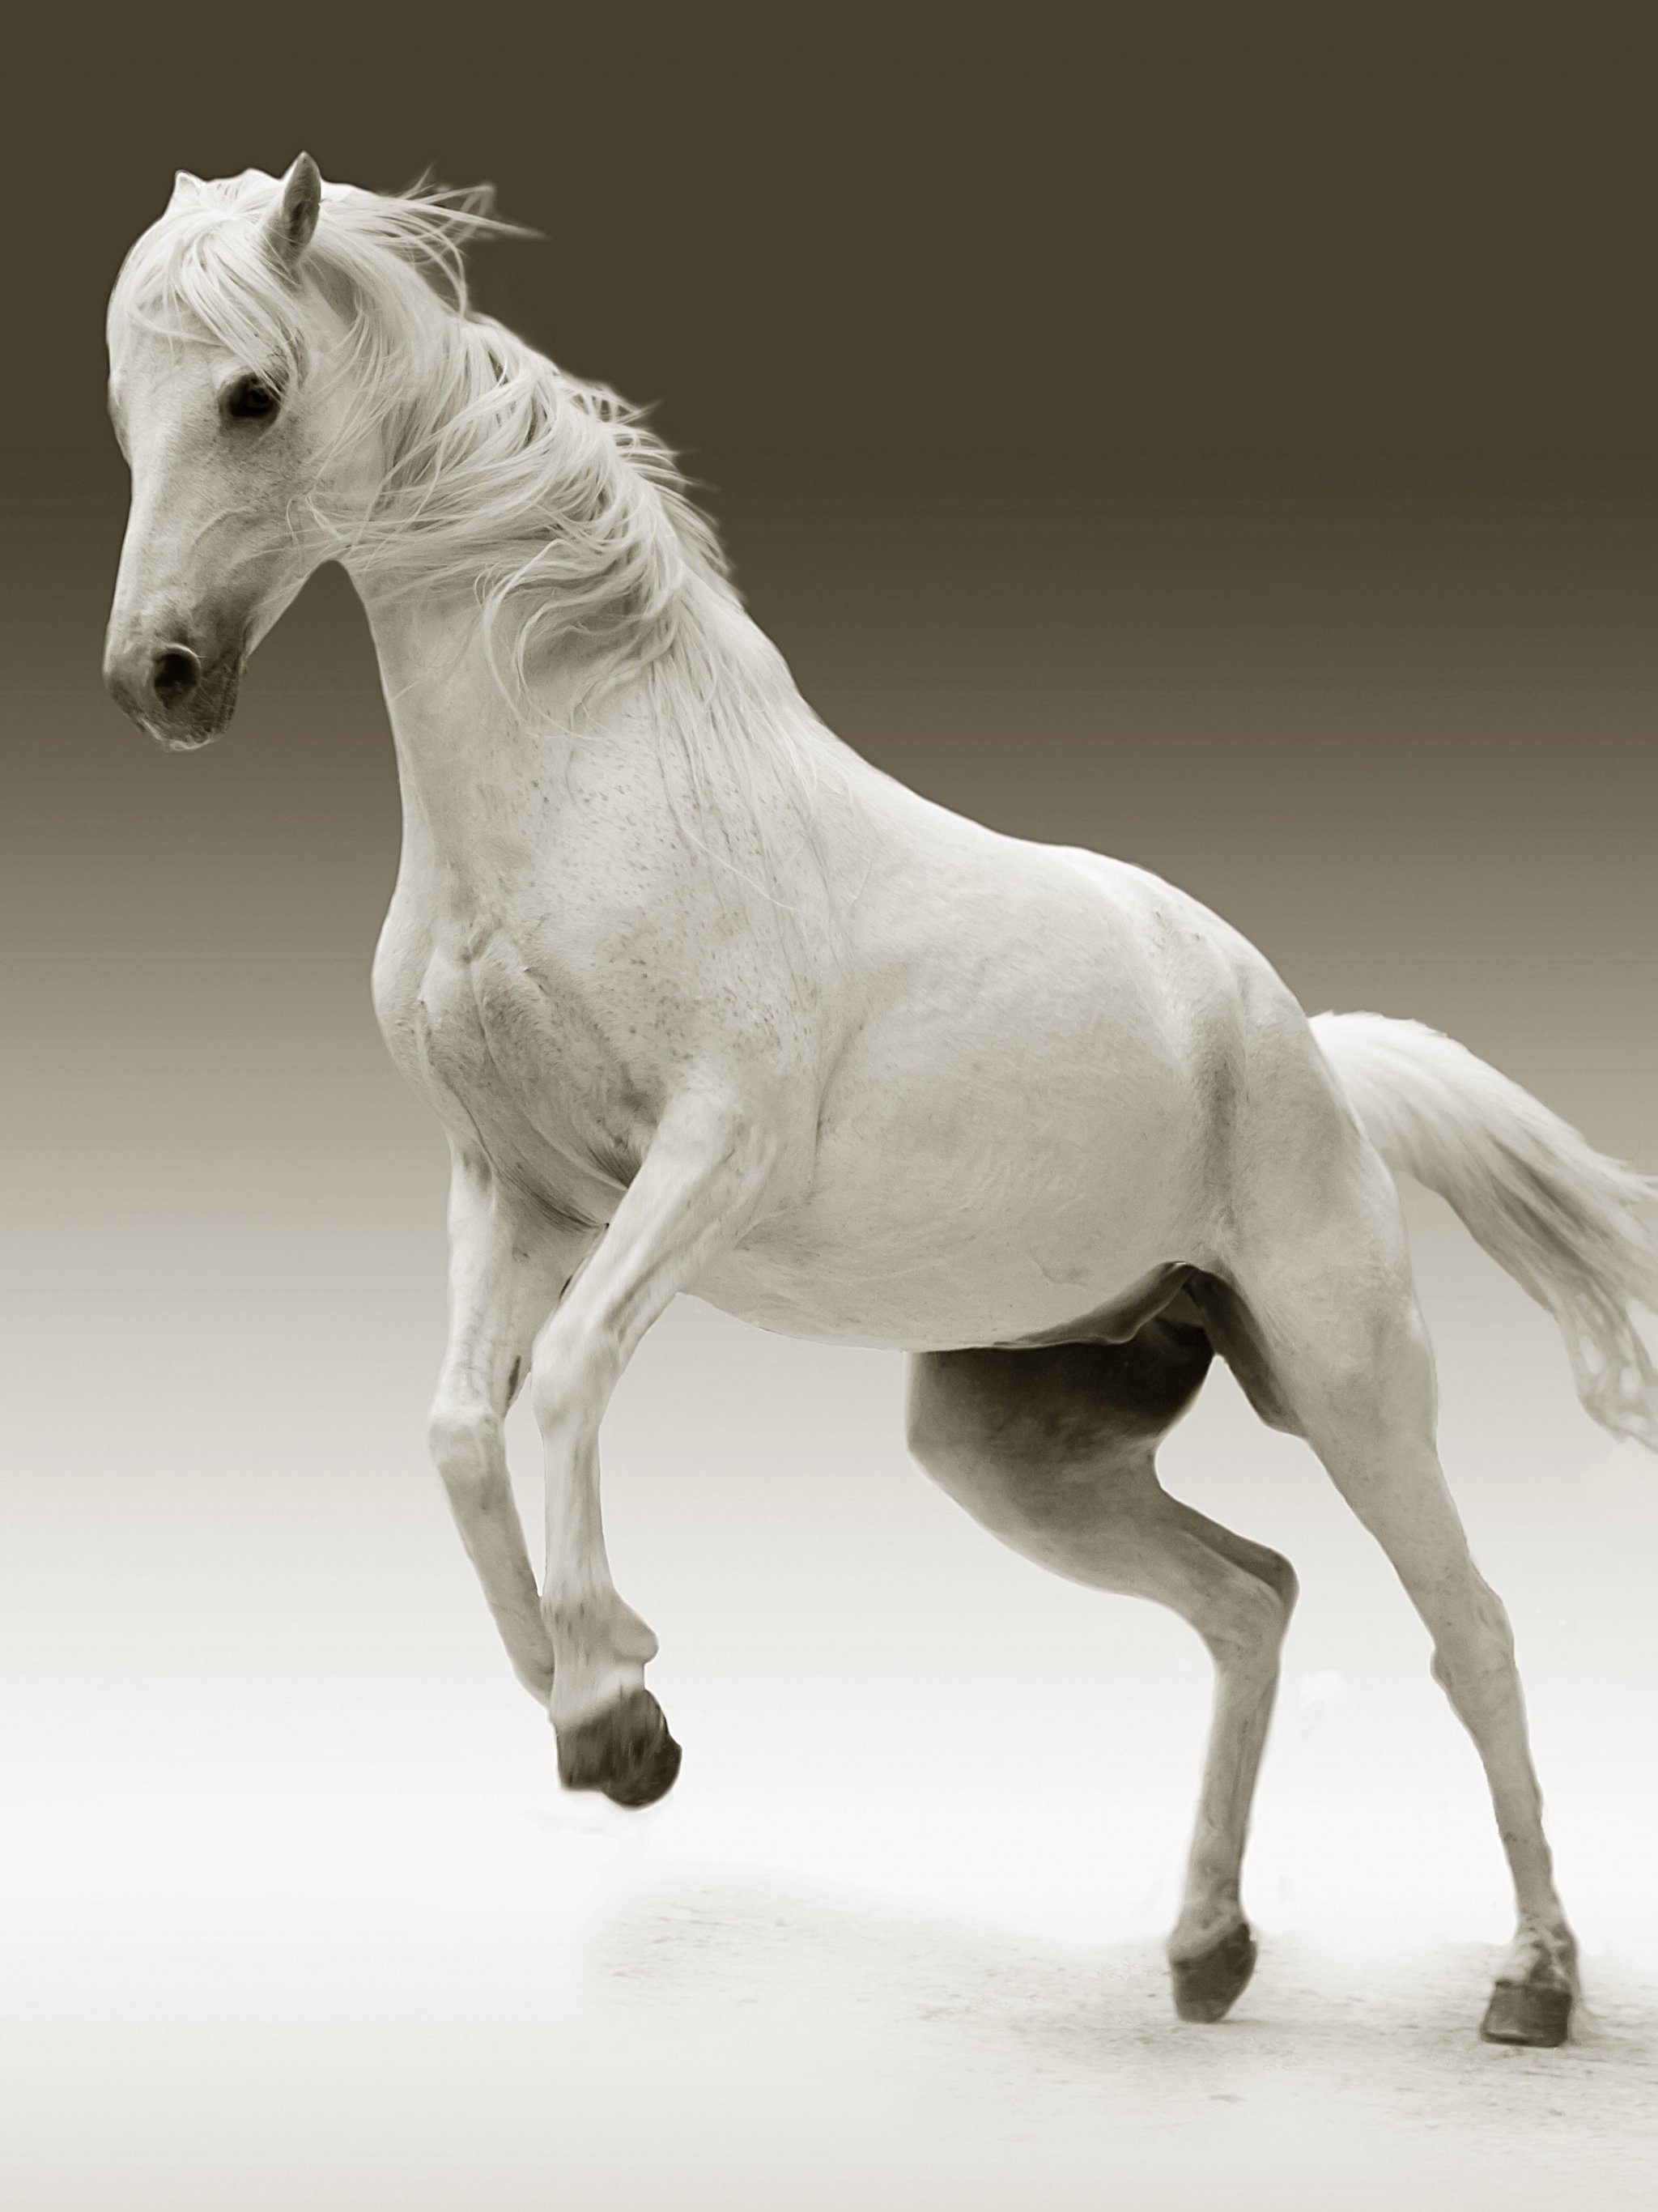 White Horse - White Horse Wallpaper For Mobile , HD Wallpaper & Backgrounds